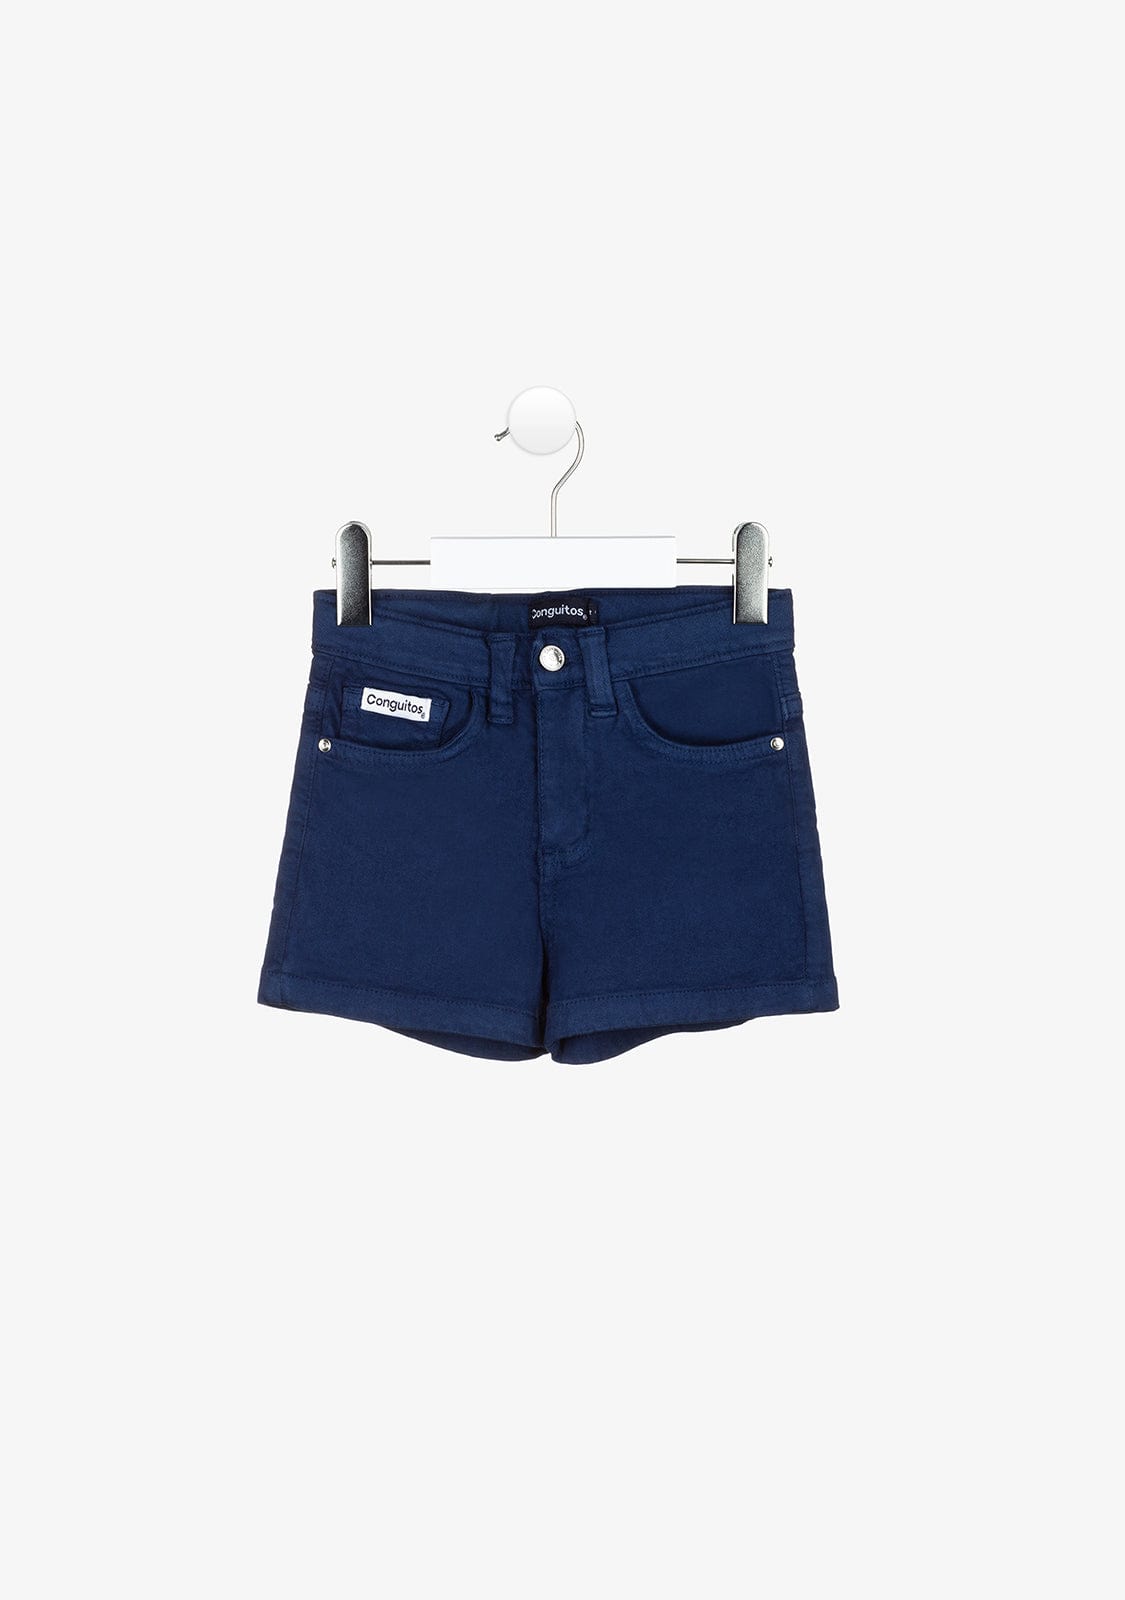 CONGUITOS TEXTIL Clothing Girl's Navy Shorts